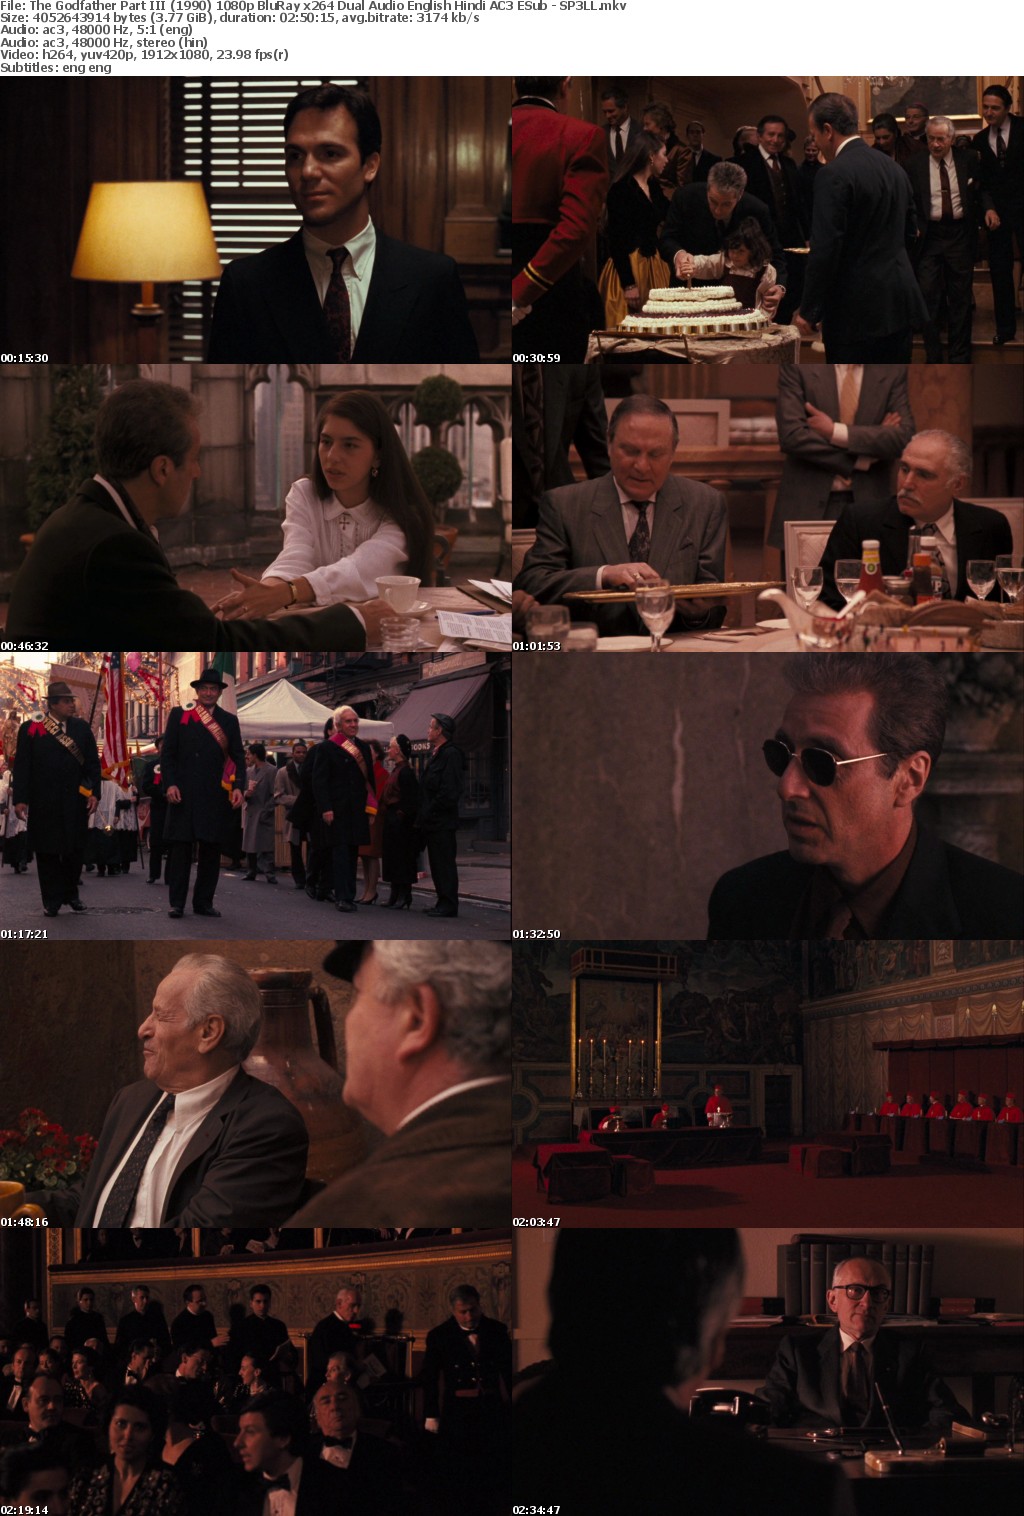 The Godfather Part III (1990) 1080p BluRay x264 Dual Audio English Hindi AC3 ESub - SP3LL